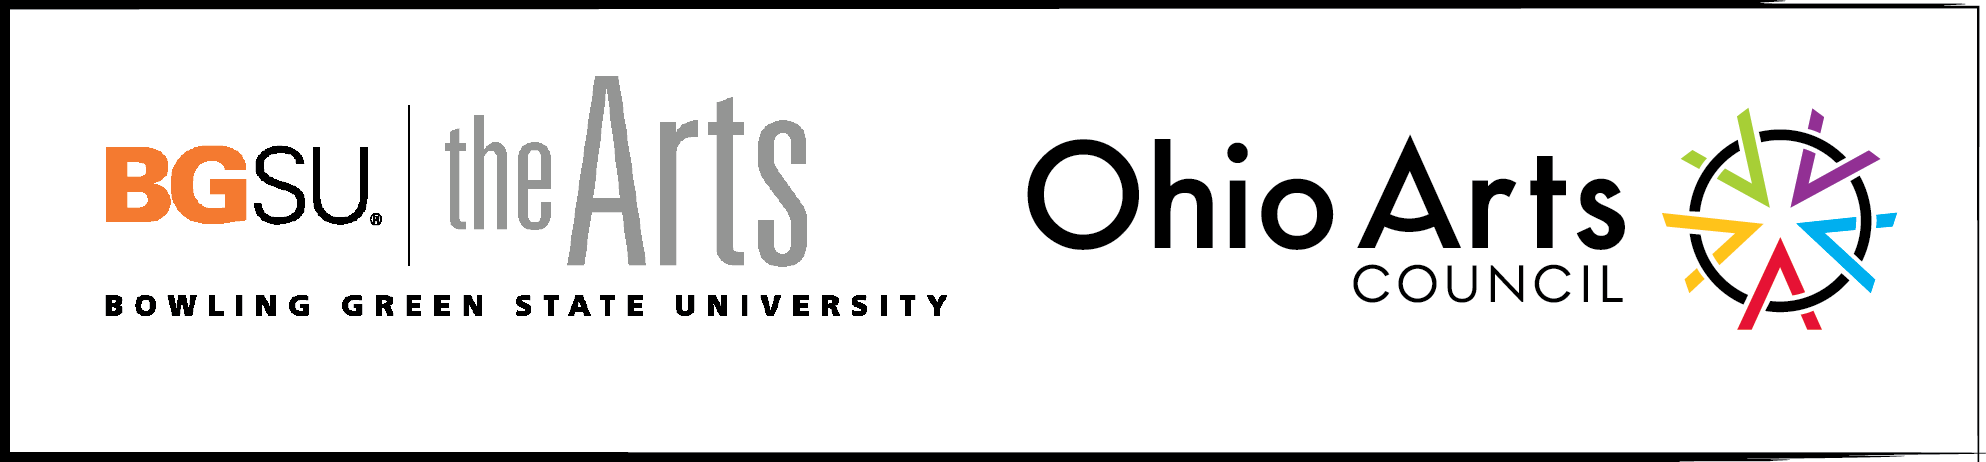 "BGSU: The Arts" and "Ohio Arts Council" logos